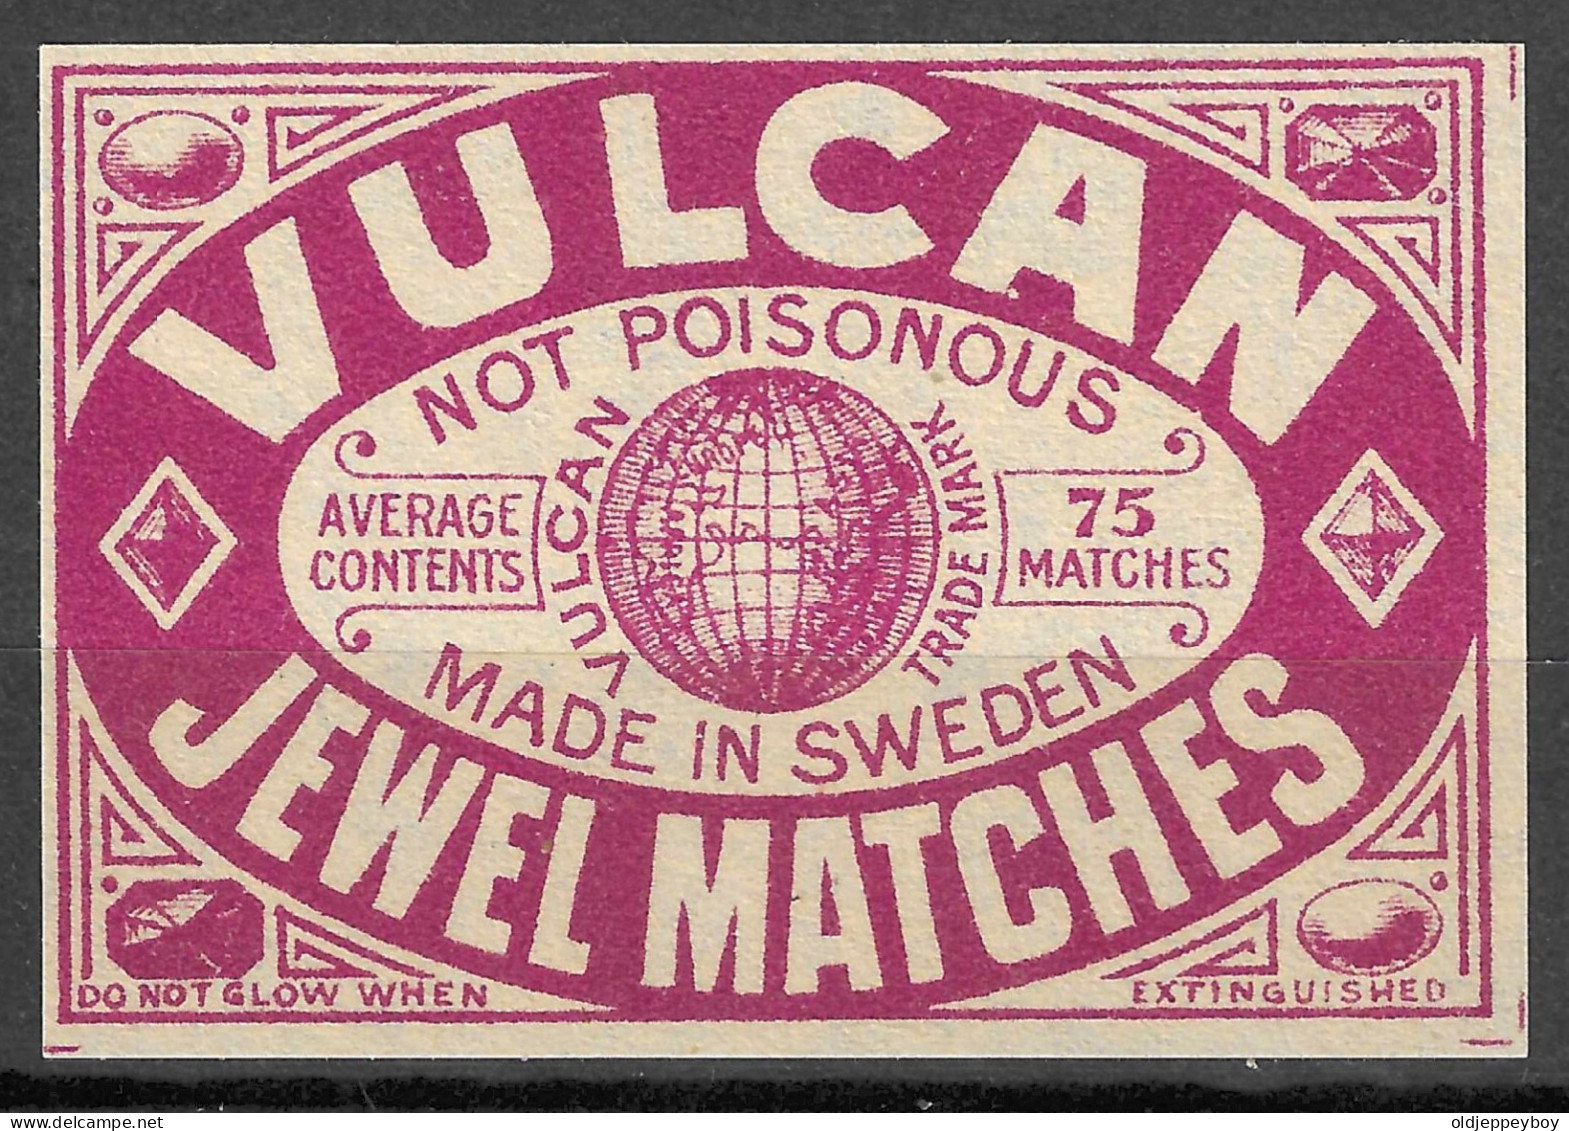  MADE  IN SWEDEN   VINTAGE Phillumeny MATCHBOX LABEL VULCAN JEWEL MATCHES  6.5  X 4.5 CM  RARE - Boites D'allumettes - Etiquettes